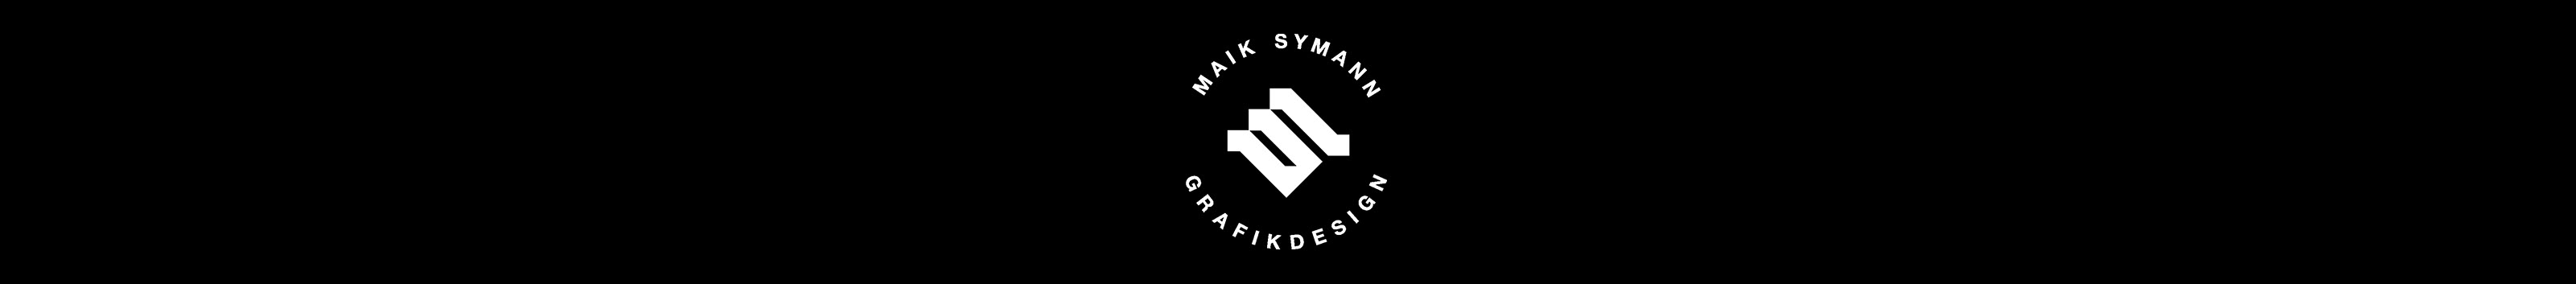 Maik Symann's profile banner